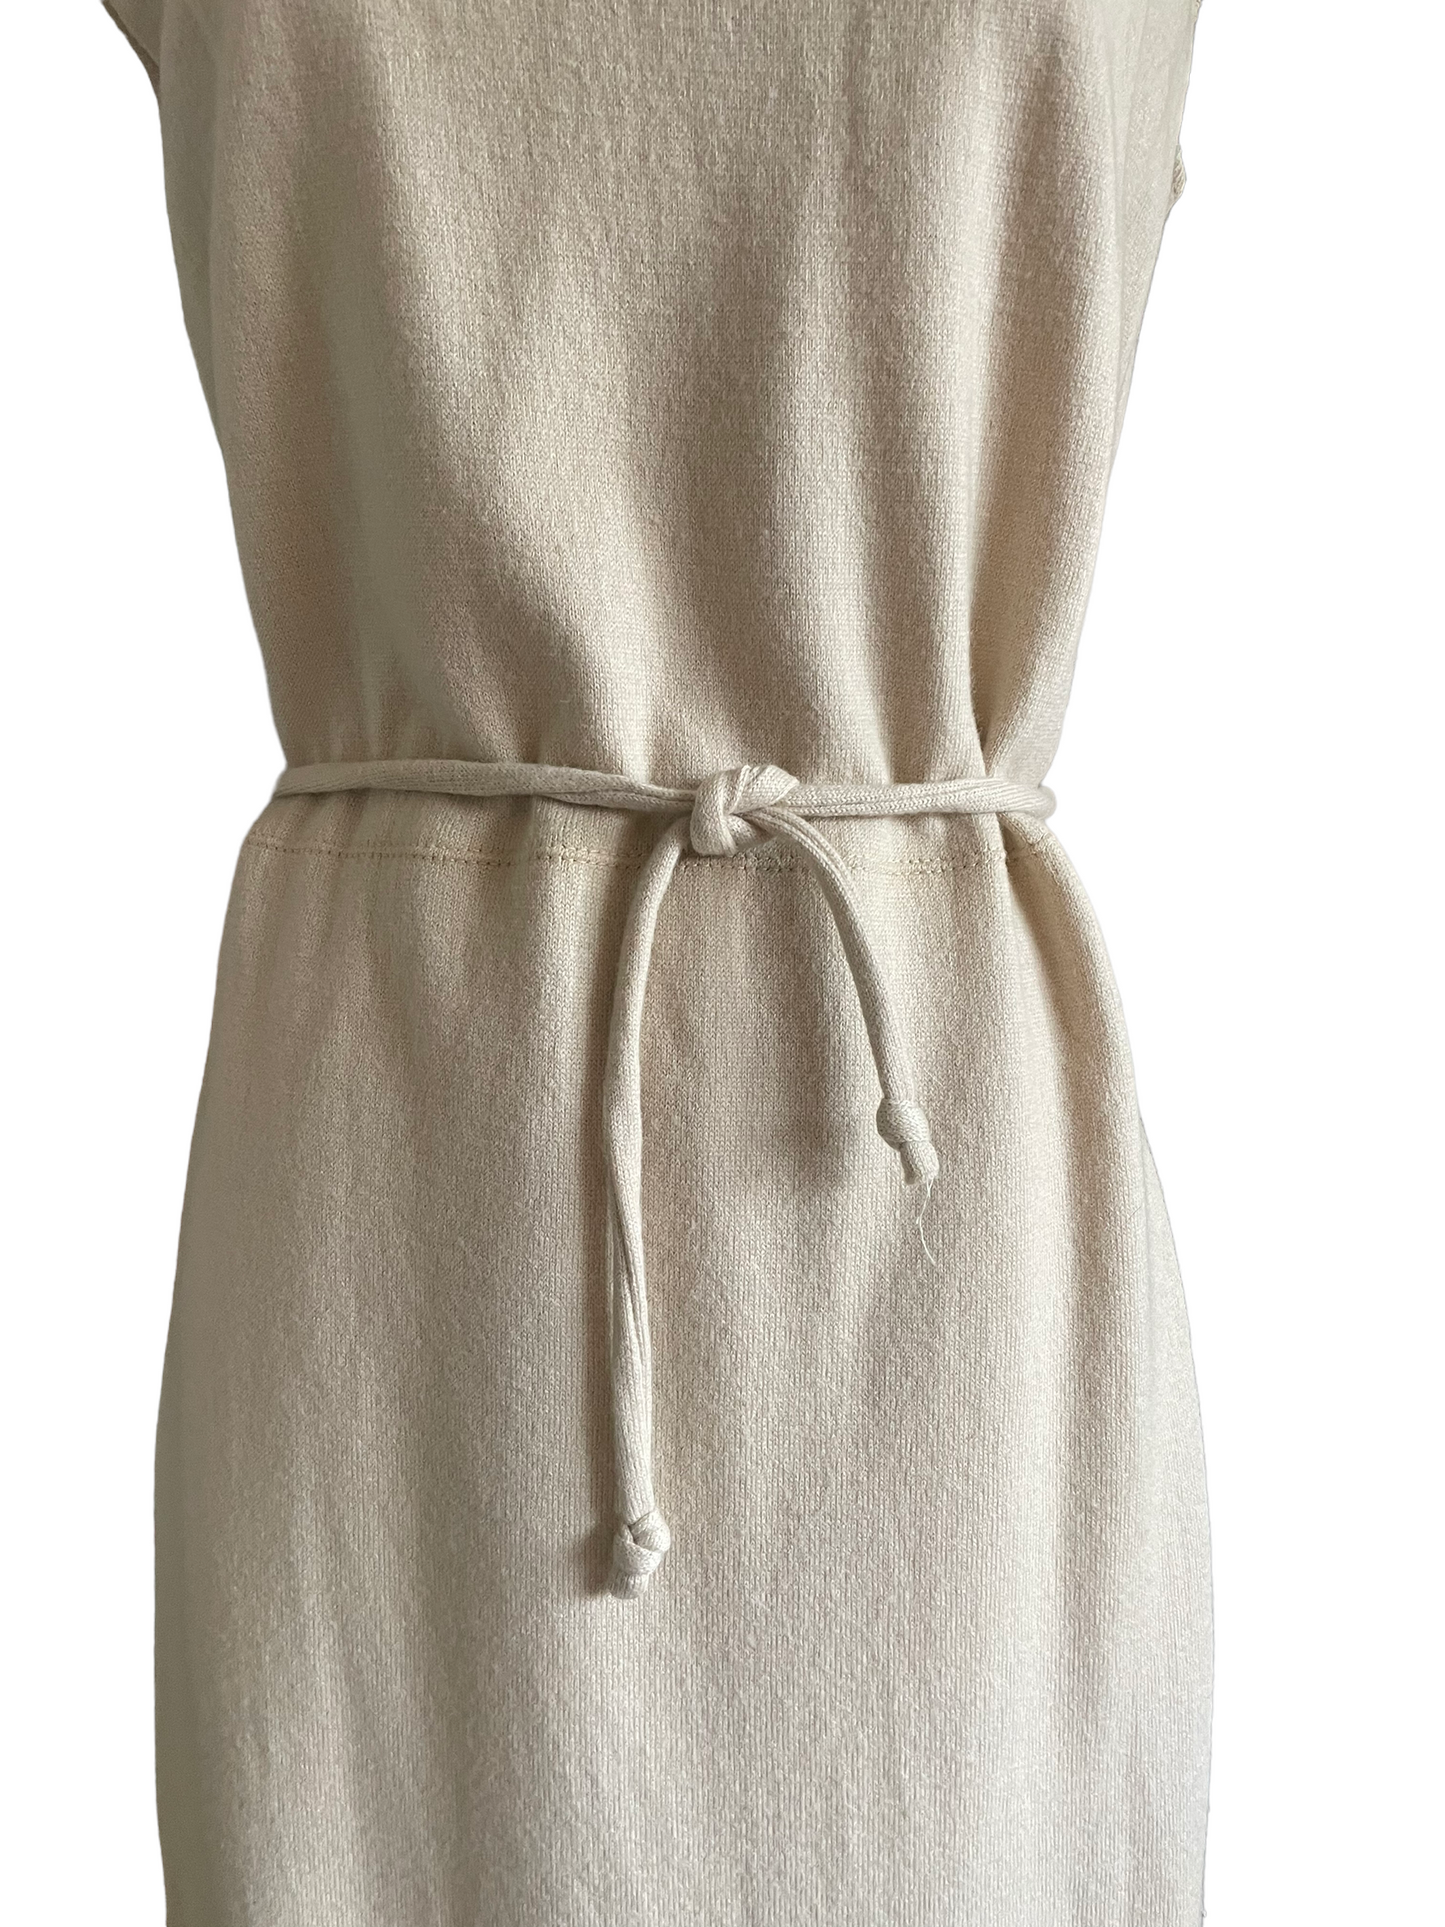 Vintage 1960s Jantzen Cream Wool Dress SZ Med |  Barn Owl Vintage | Seattle Vintage Dresses Mid view of waist and belt.